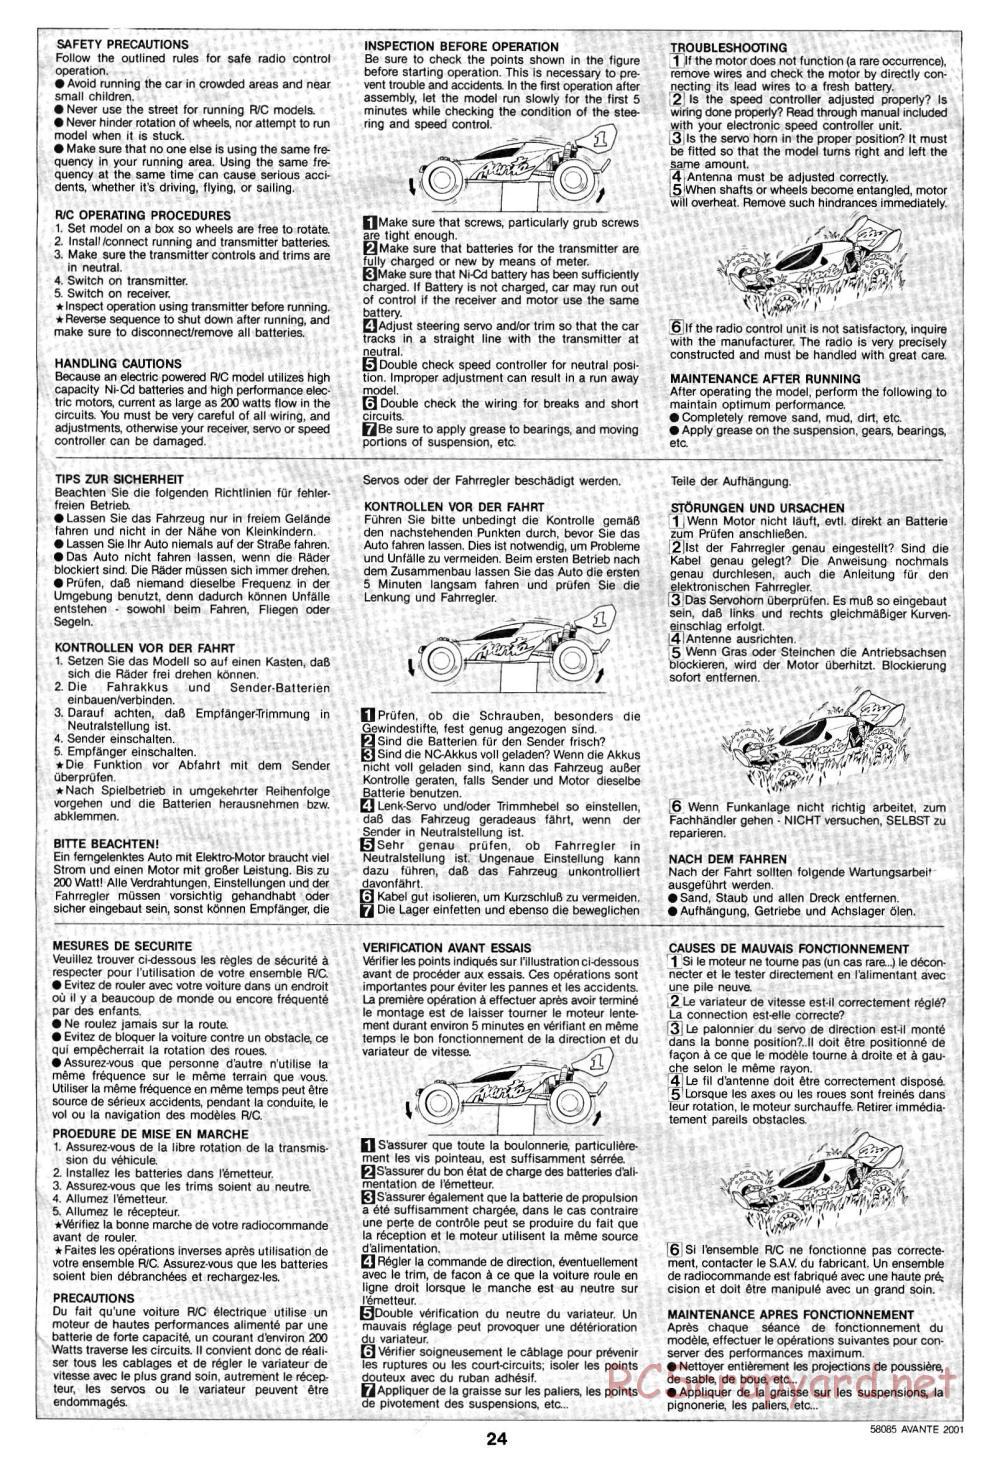 Tamiya - Avante 2001 - 58085 - Manual - Page 24